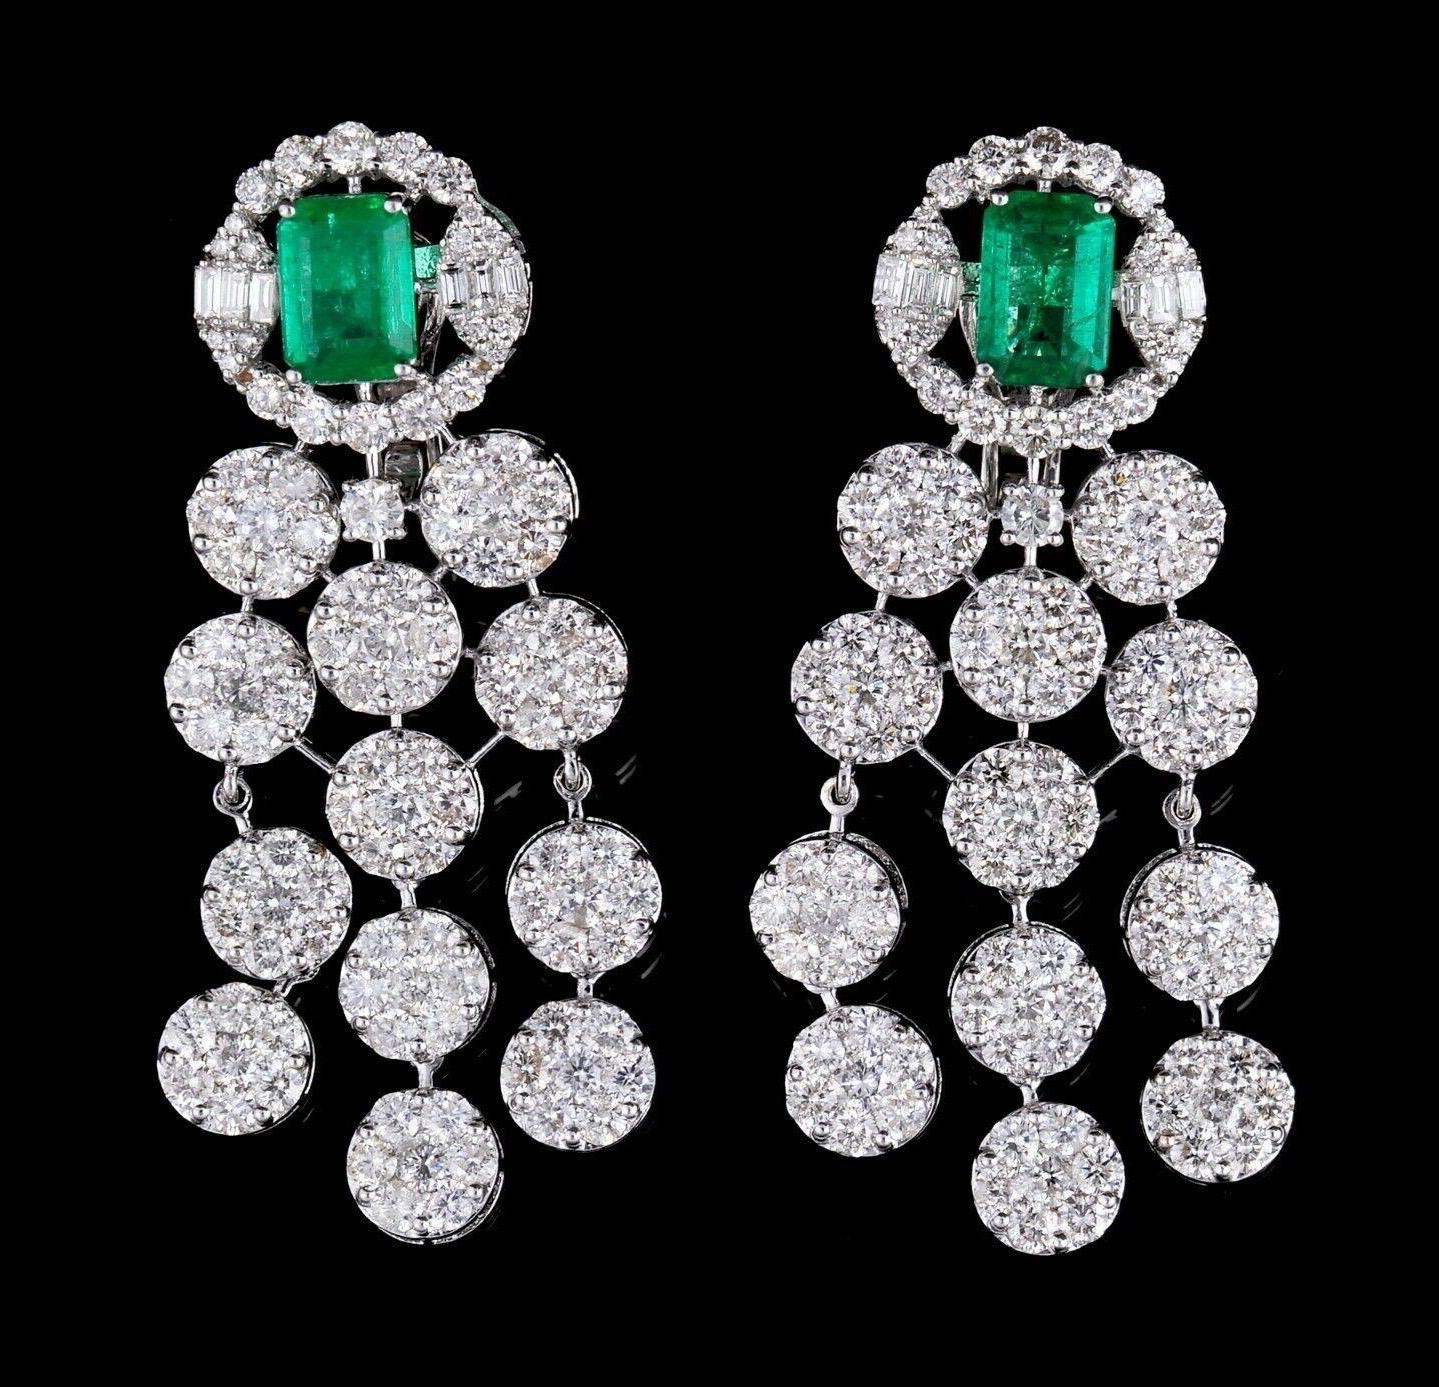 Mixed Cut 14.10 carat Diamond 3.60 carat Emerald 14 Karat White Gold Chandelier Earrings For Sale